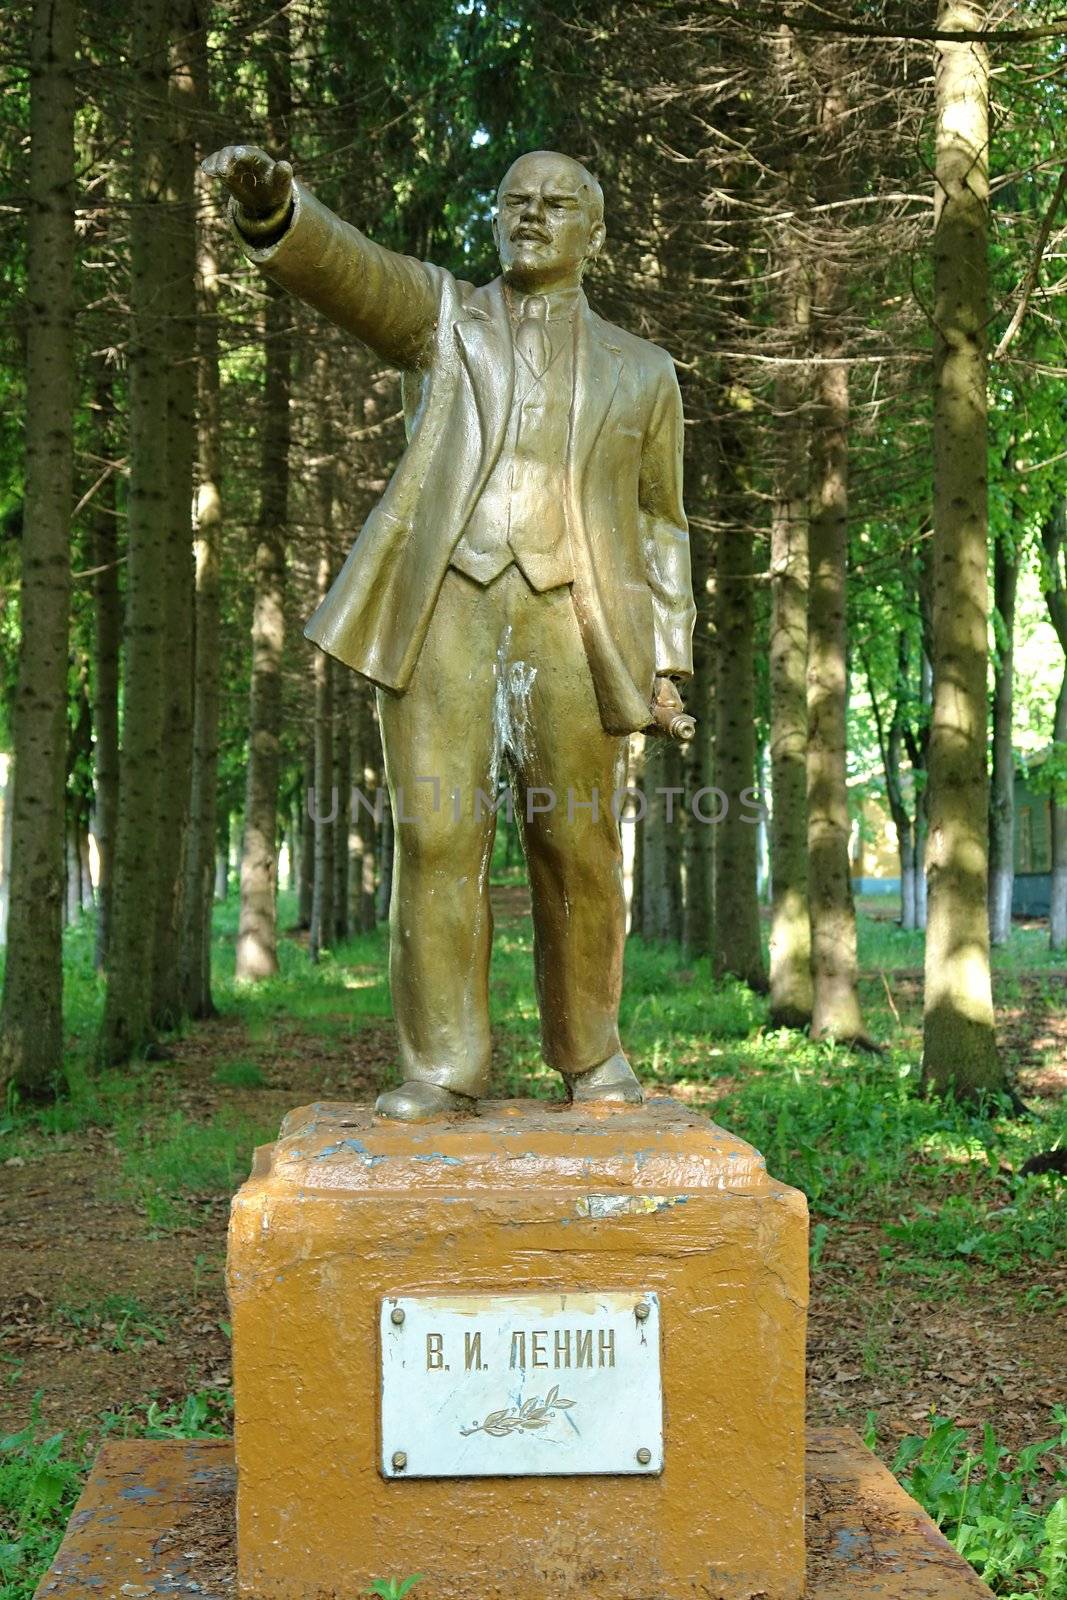 Monument to the leader of world revolution Lenin in the pine park.